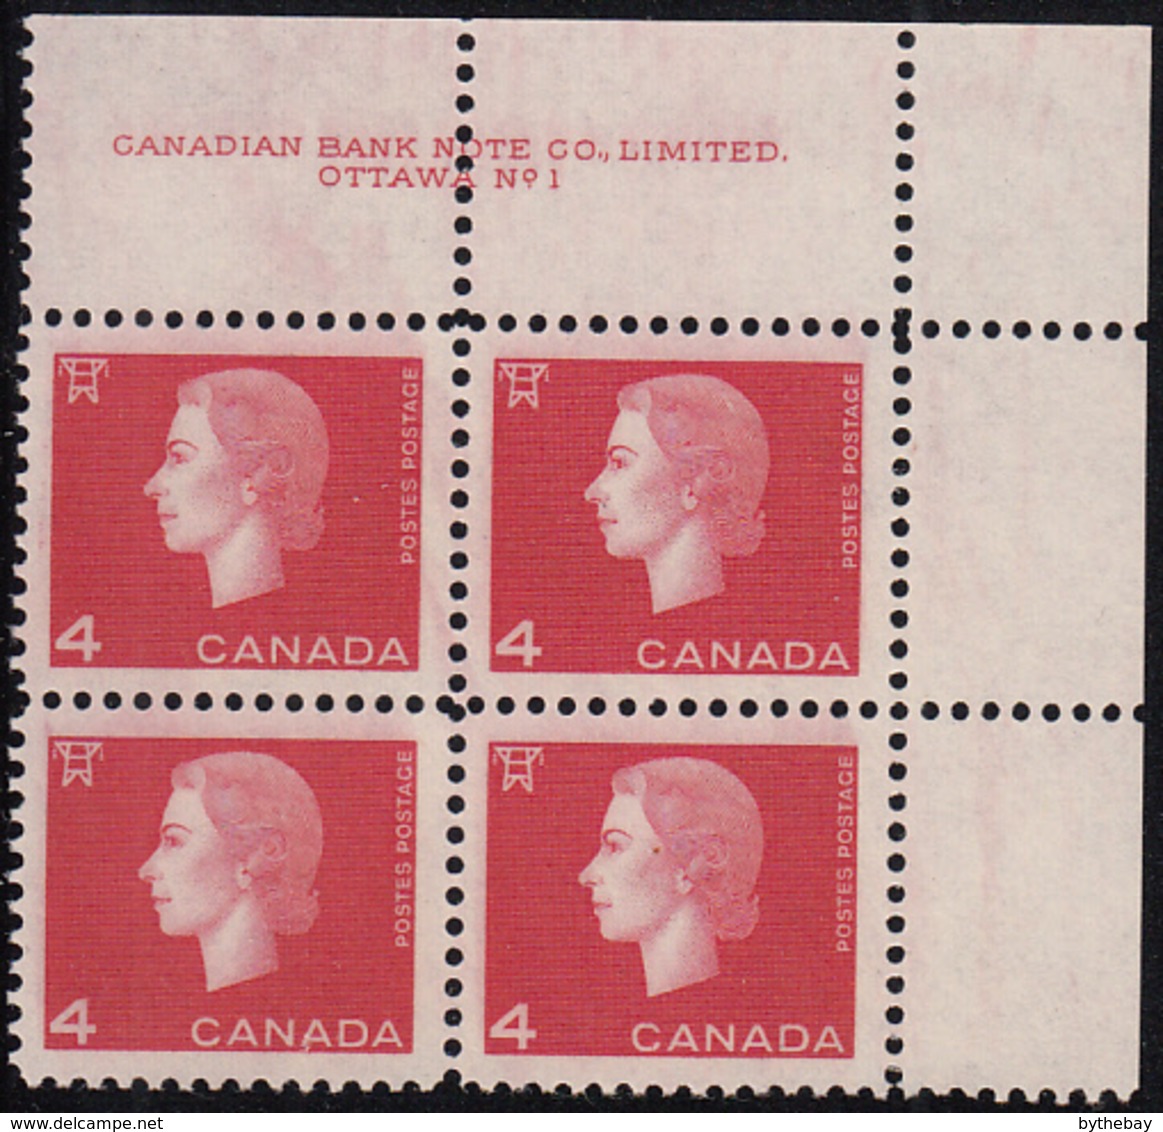 Canada 1963 MNH Sc #404 4c QEII Cameo Plate #1 UR - Num. Planches & Inscriptions Marge